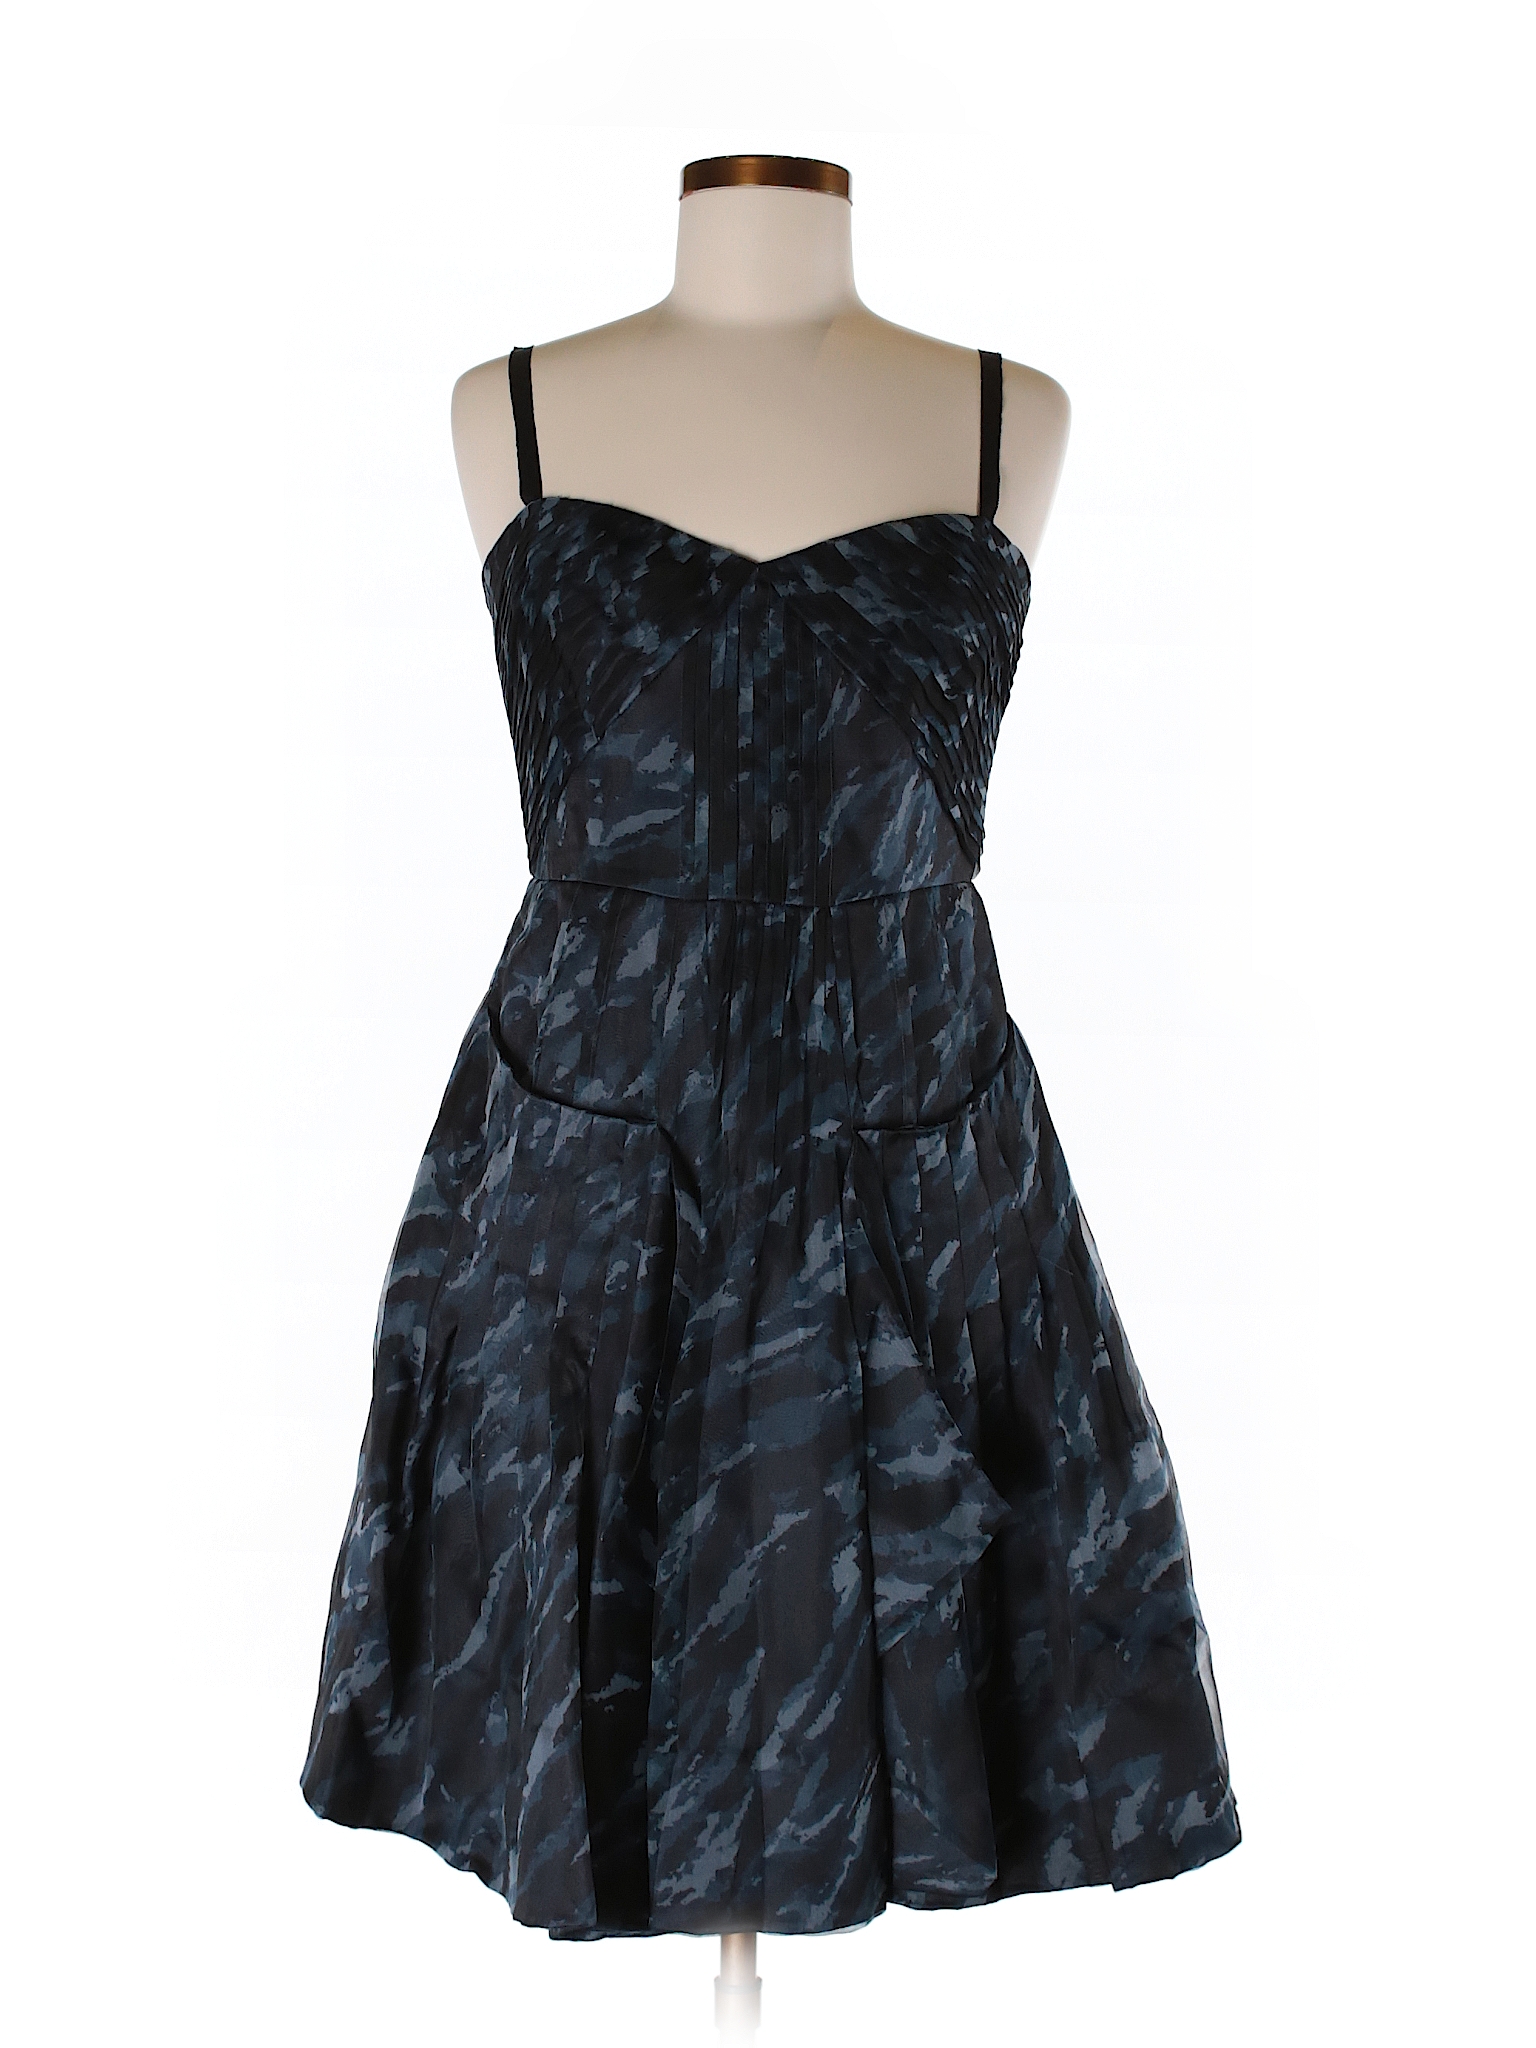 BCBGMAXAZRIA 100% Silk Print Silk Dress Size 8 - 86% off | thredUP